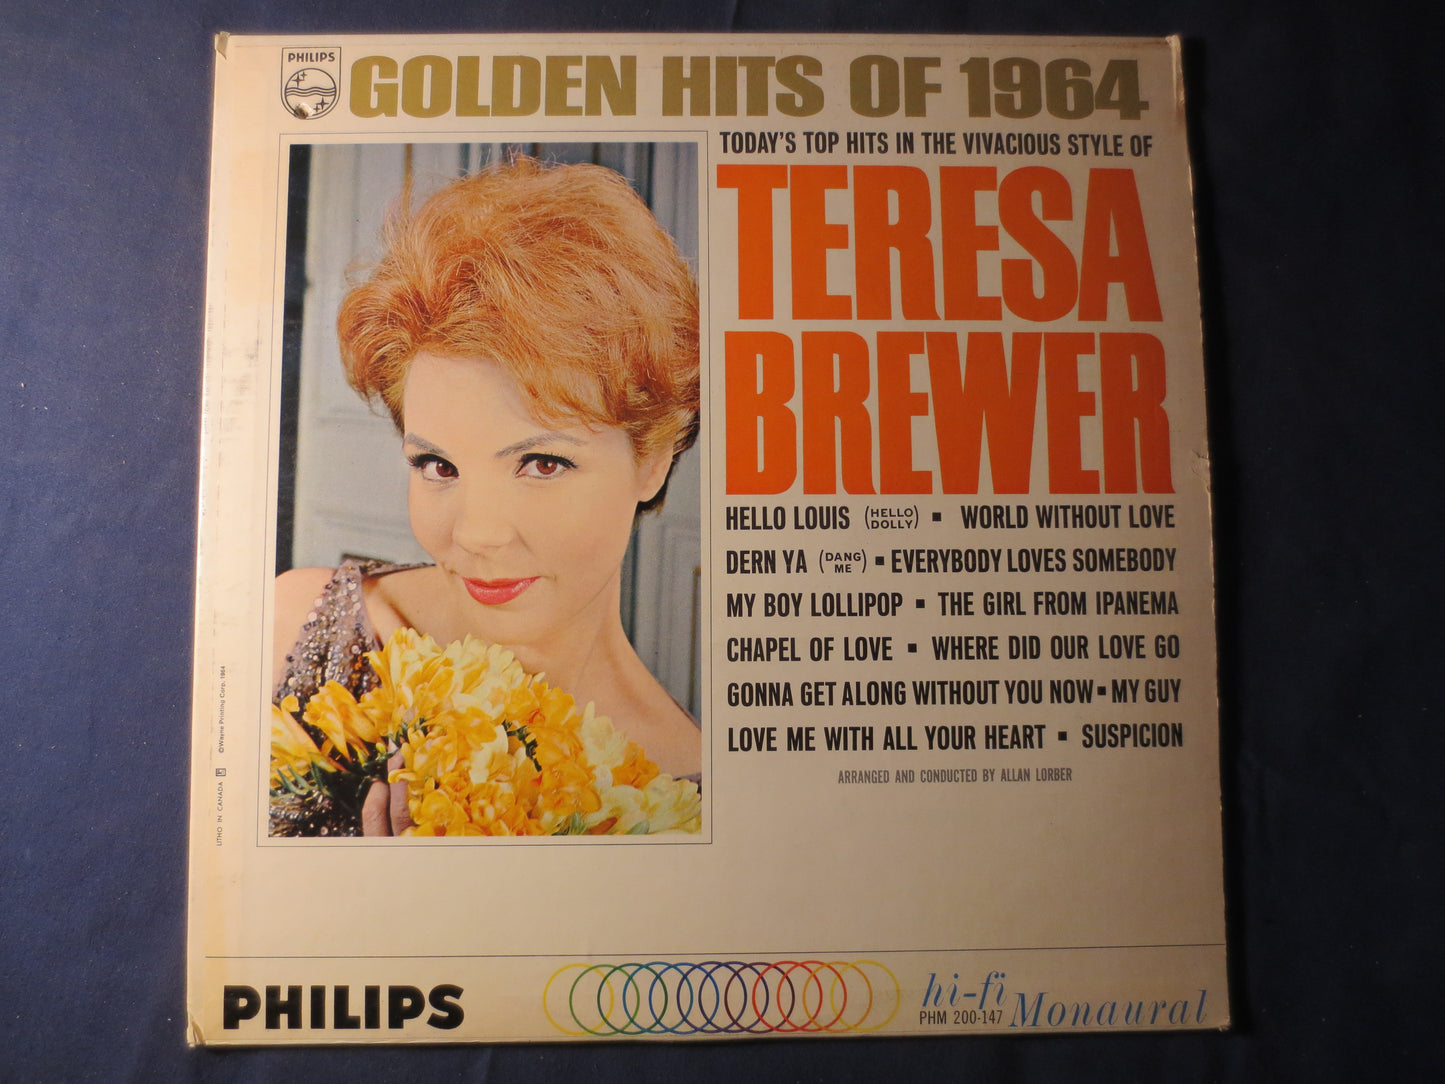 TERESA BREWER, GOLDEN Hits of 1964, Teresa Brewer Record, Teresa Brewer Album, Teresa Brewer Lps, Vinyl Lps, 1964 Records